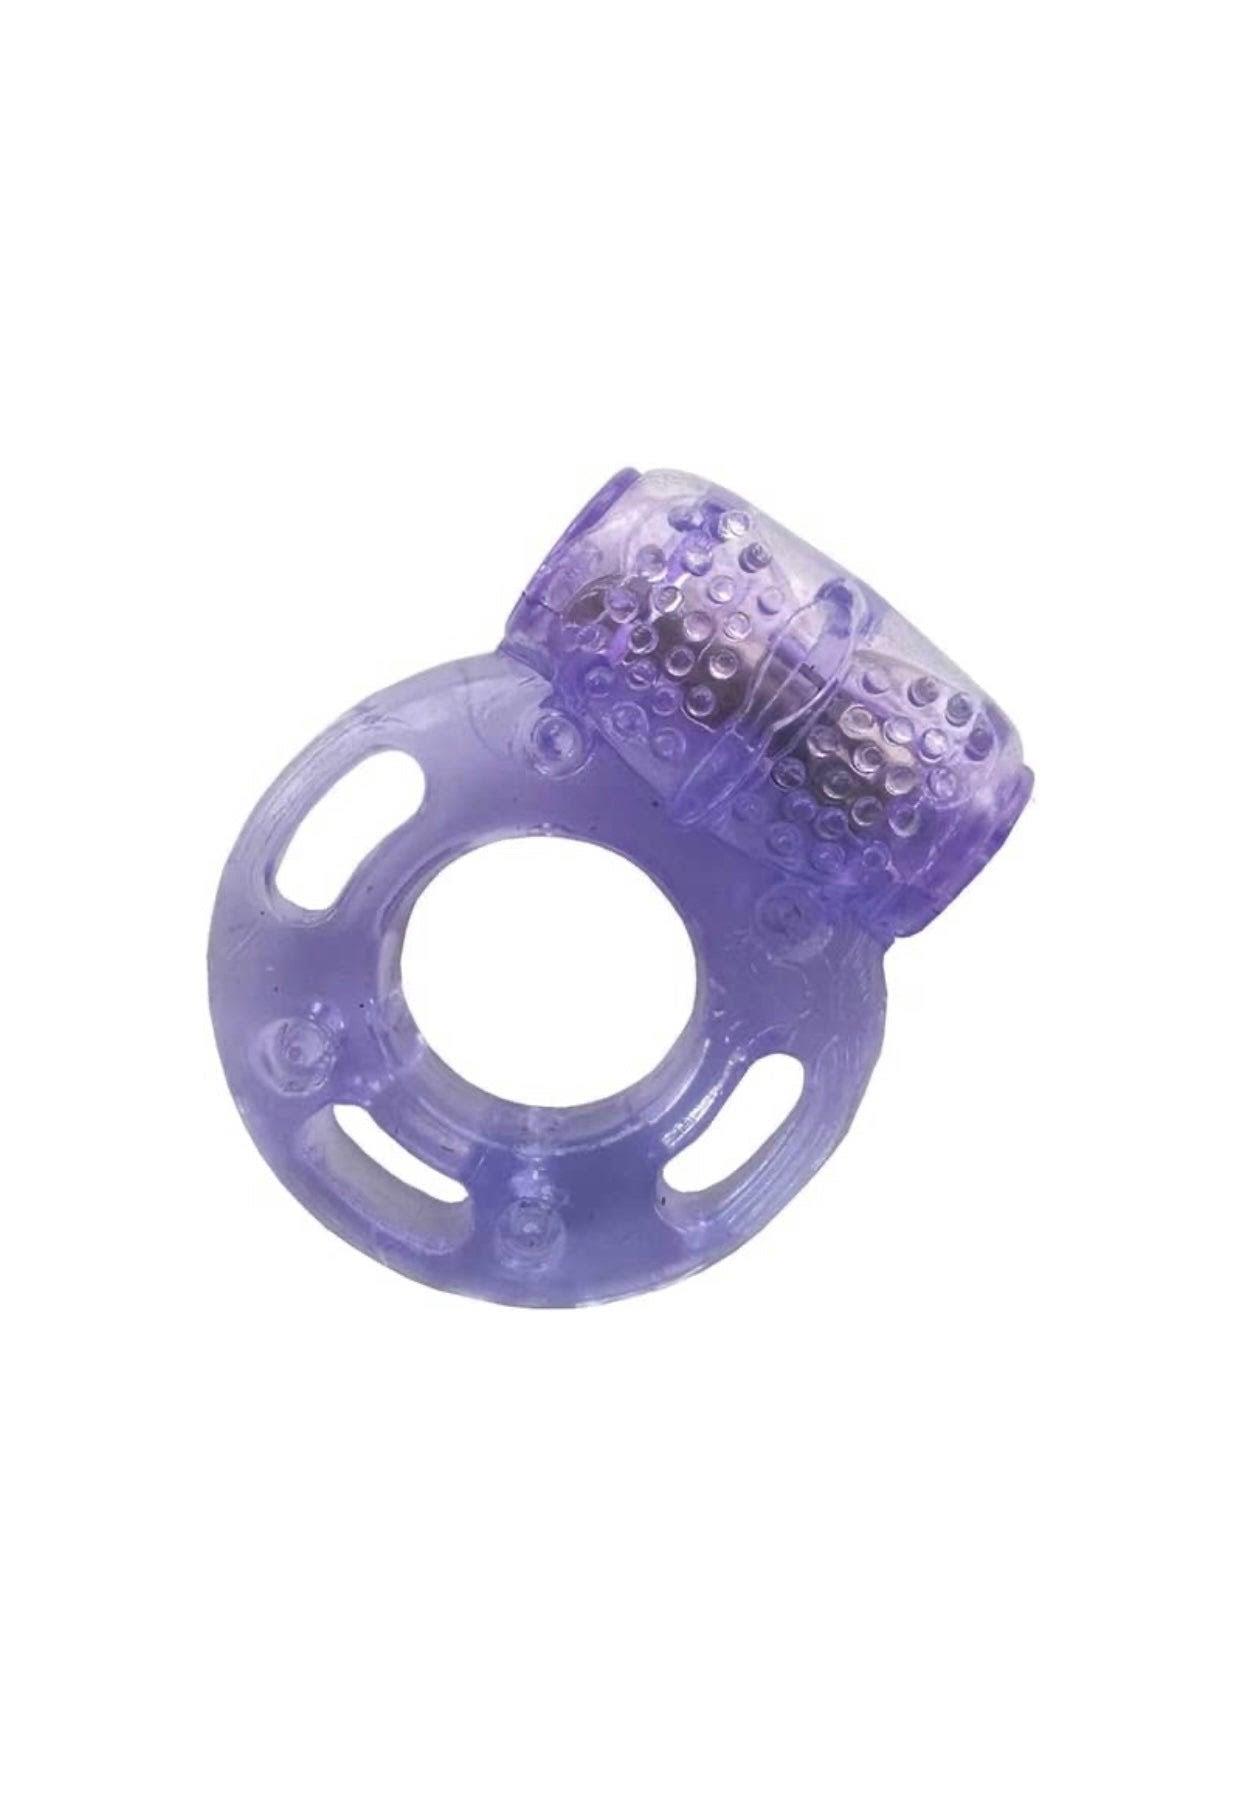 NRN's Disposable Vibrating Penis Ring